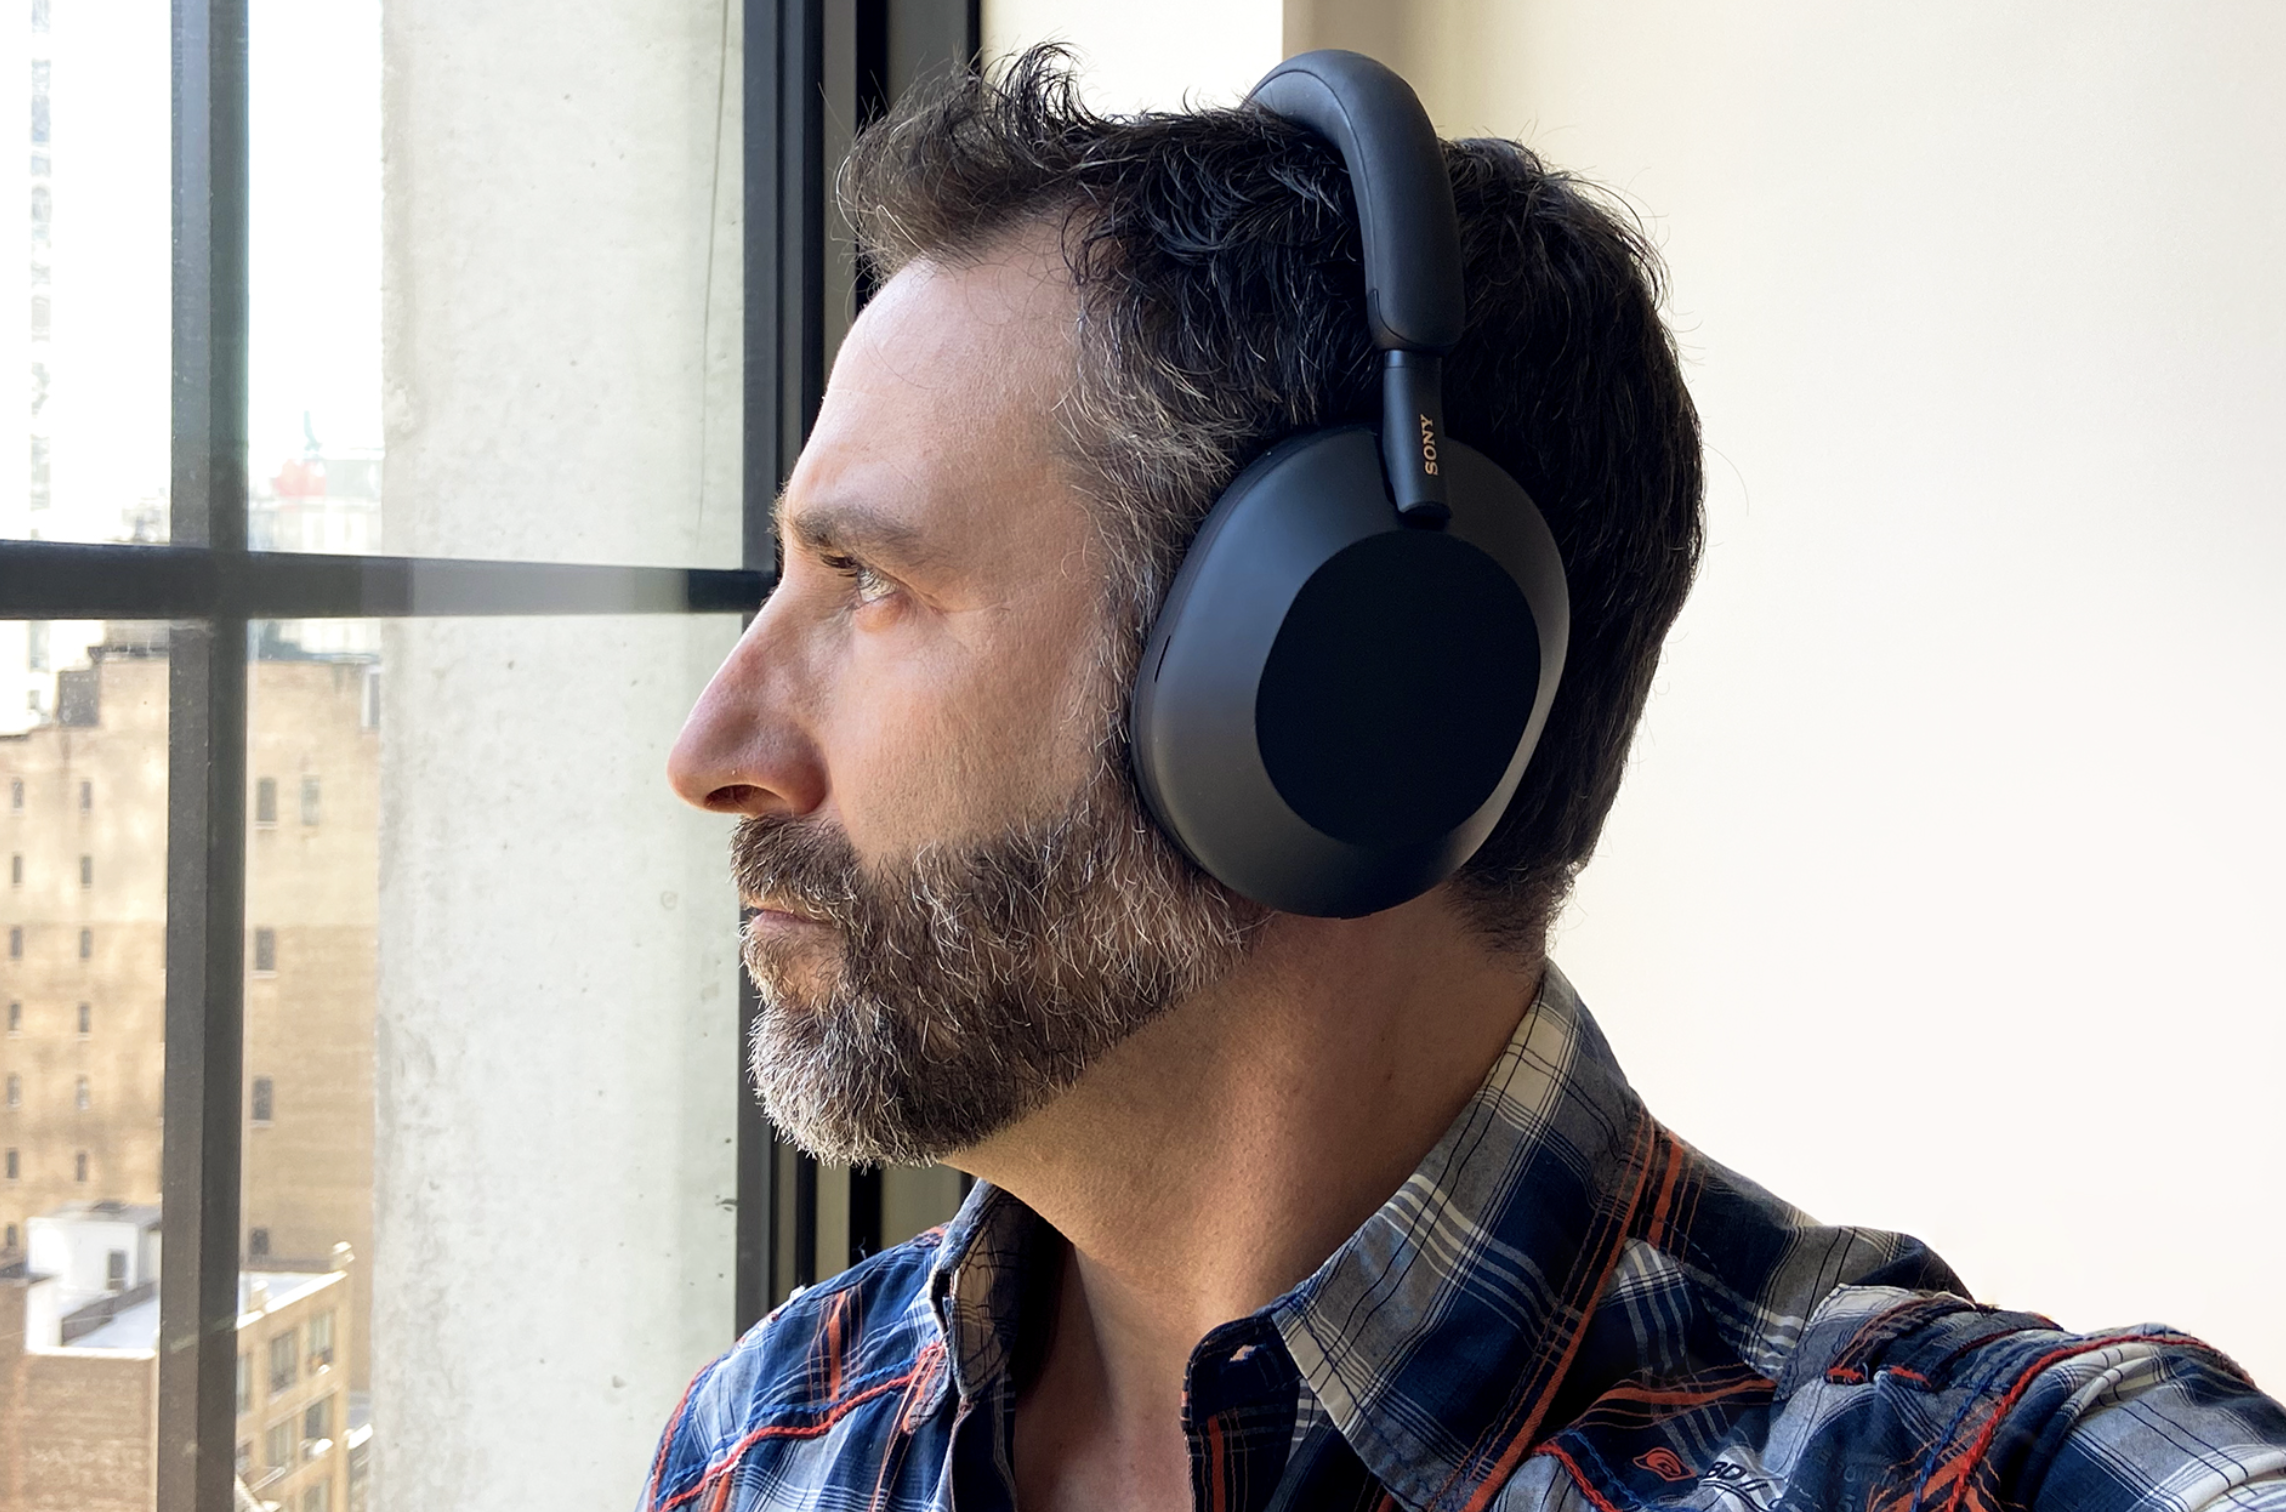 WH-1000XM5, Wireless Noise-Canceling Headphones